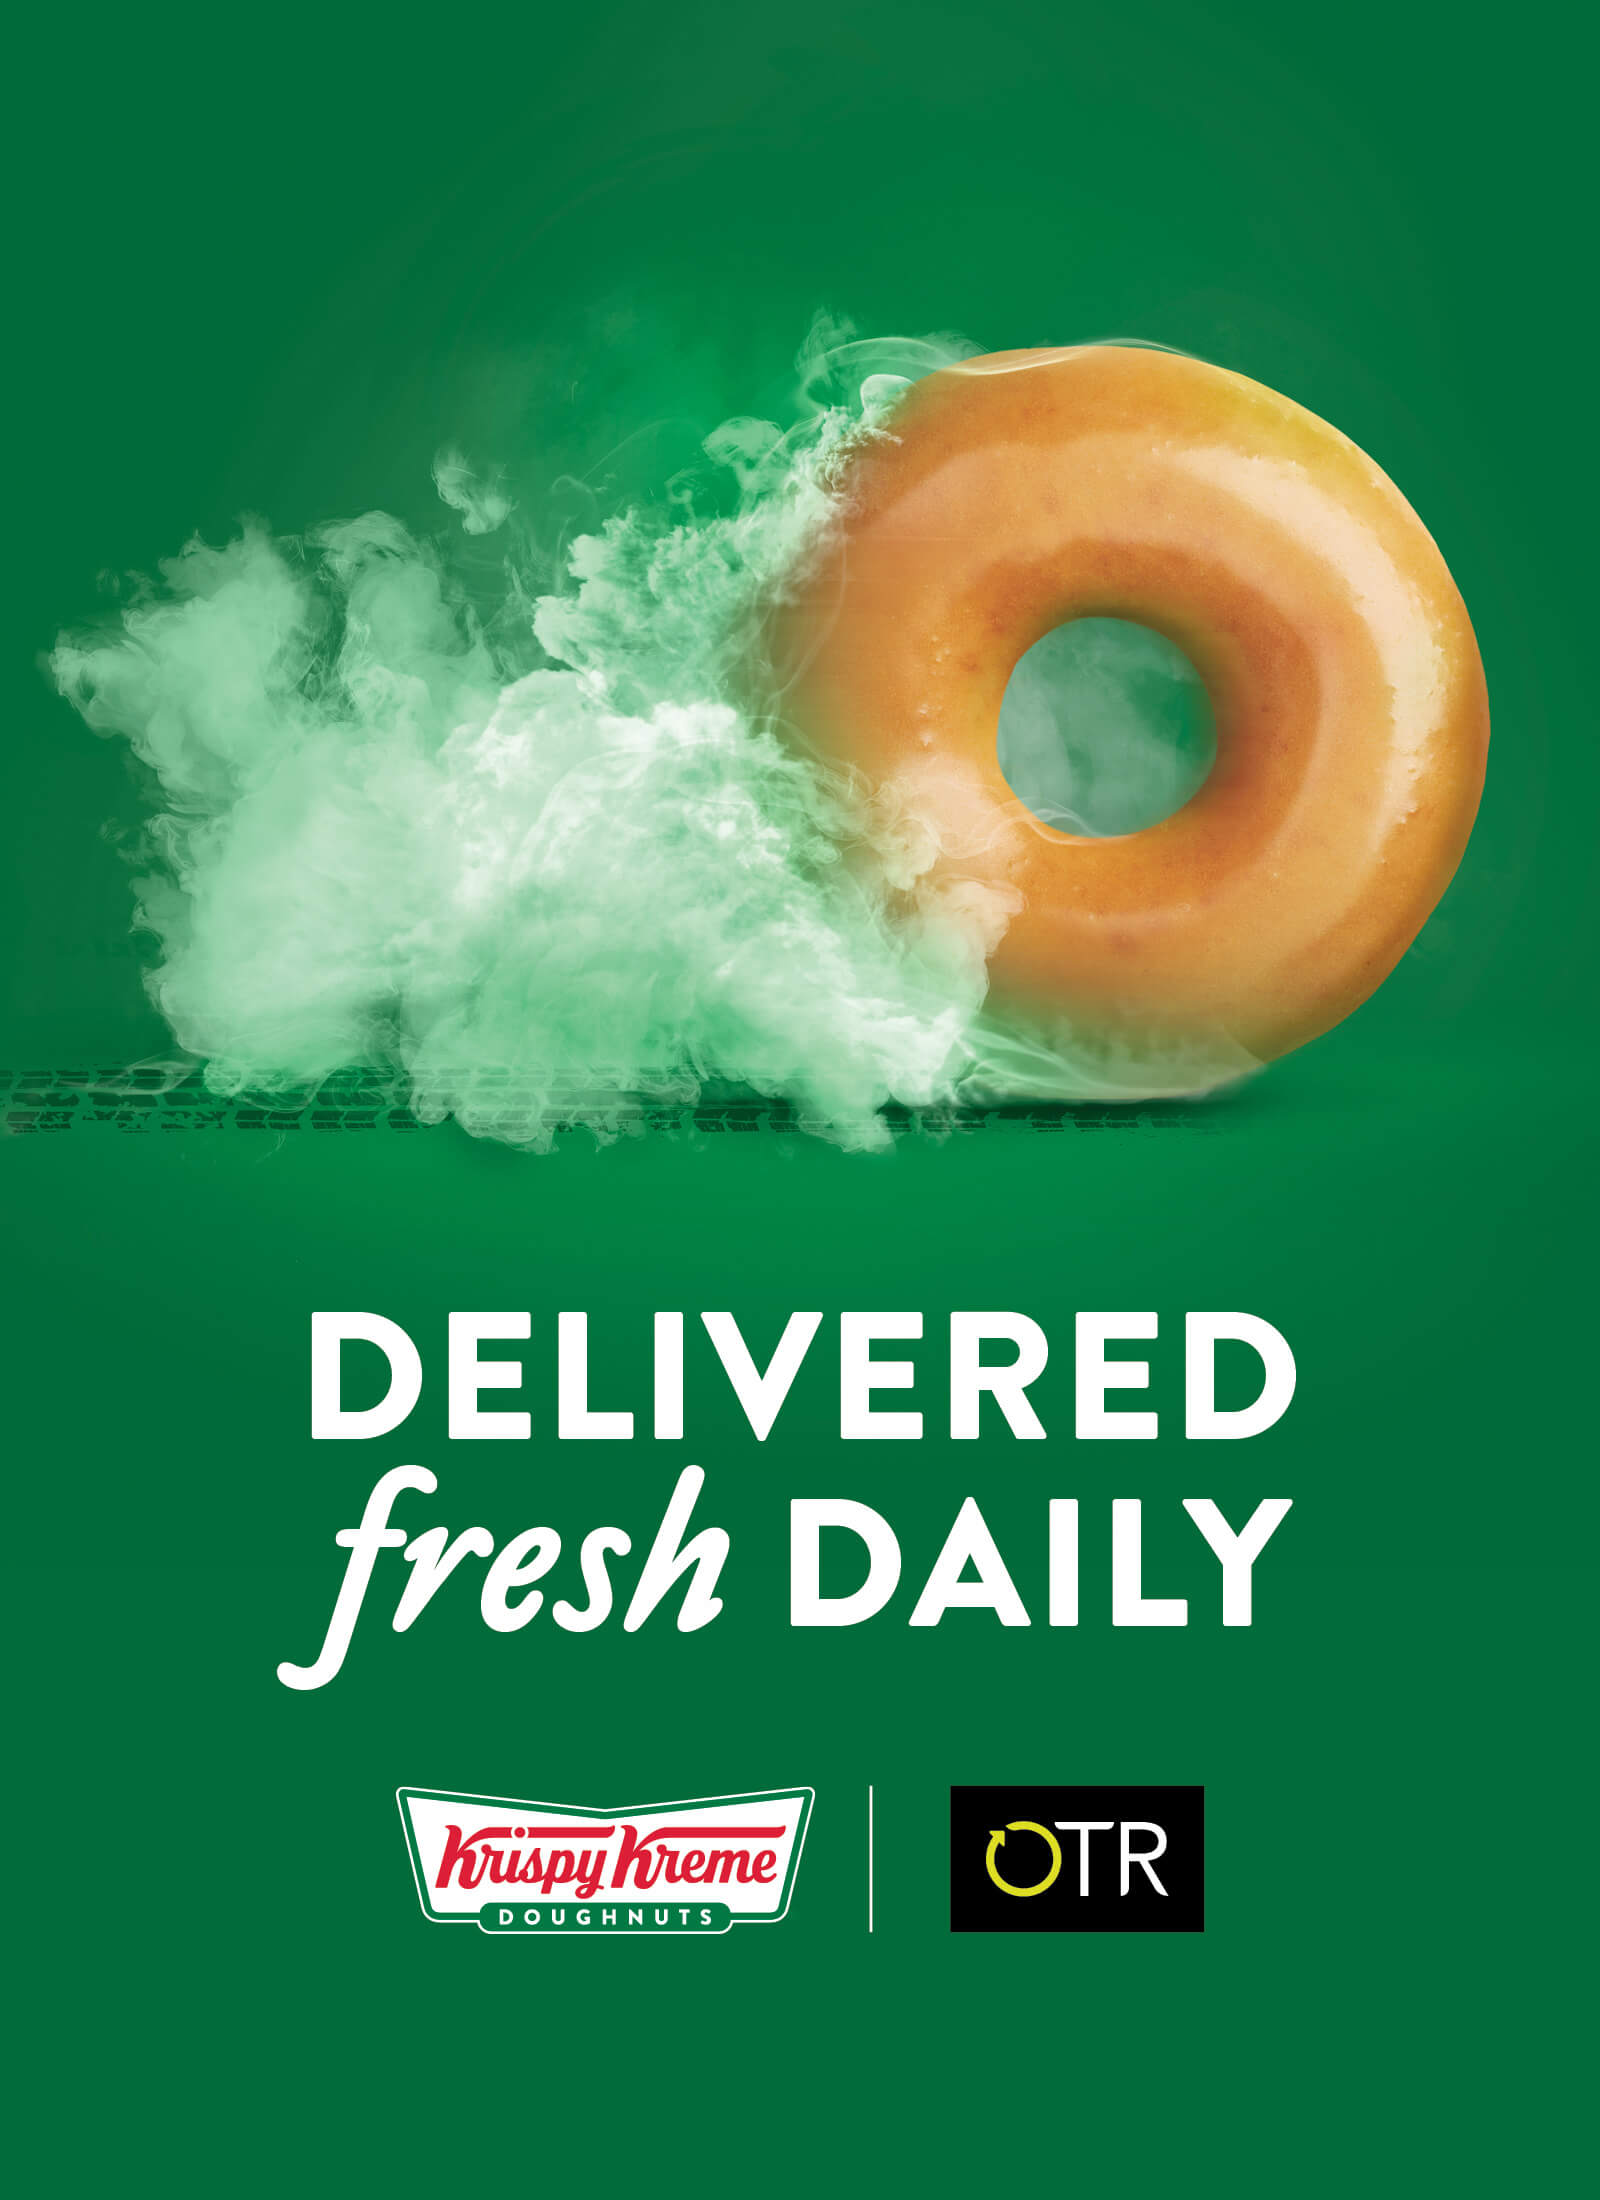 Krispy Kreme doughnuts are delivered fresh daily